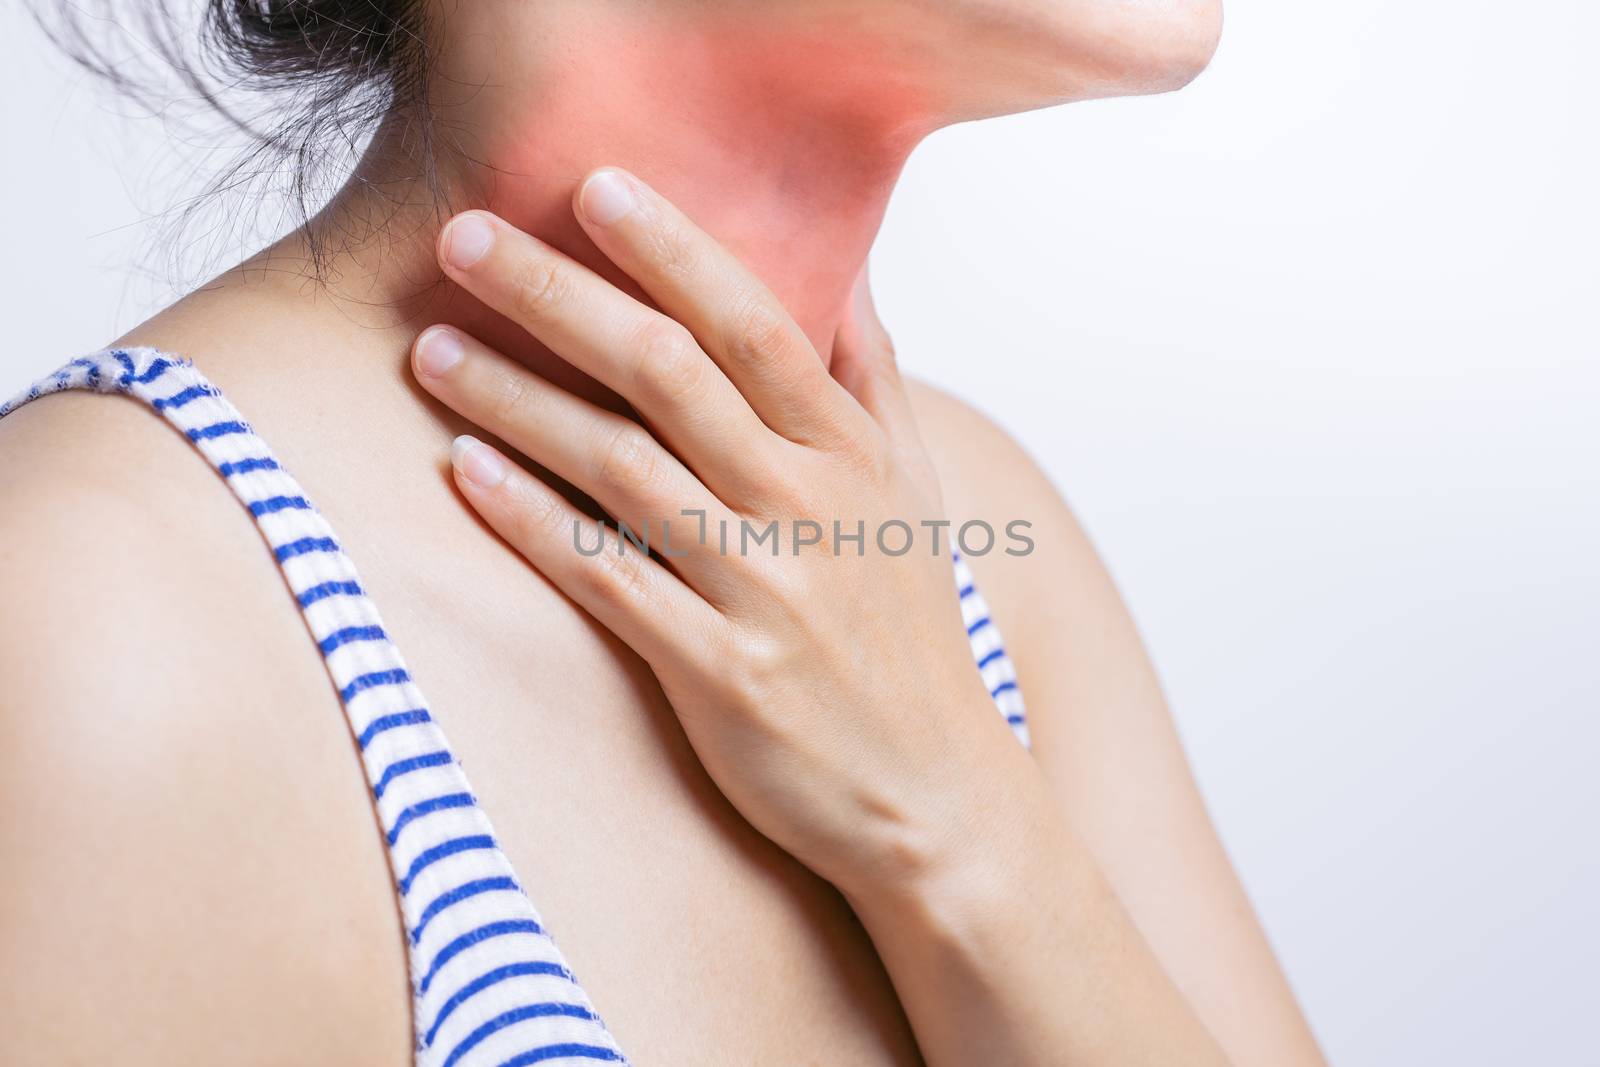 Sore throat pain women. Woman hand touching neck with sore throa by psodaz